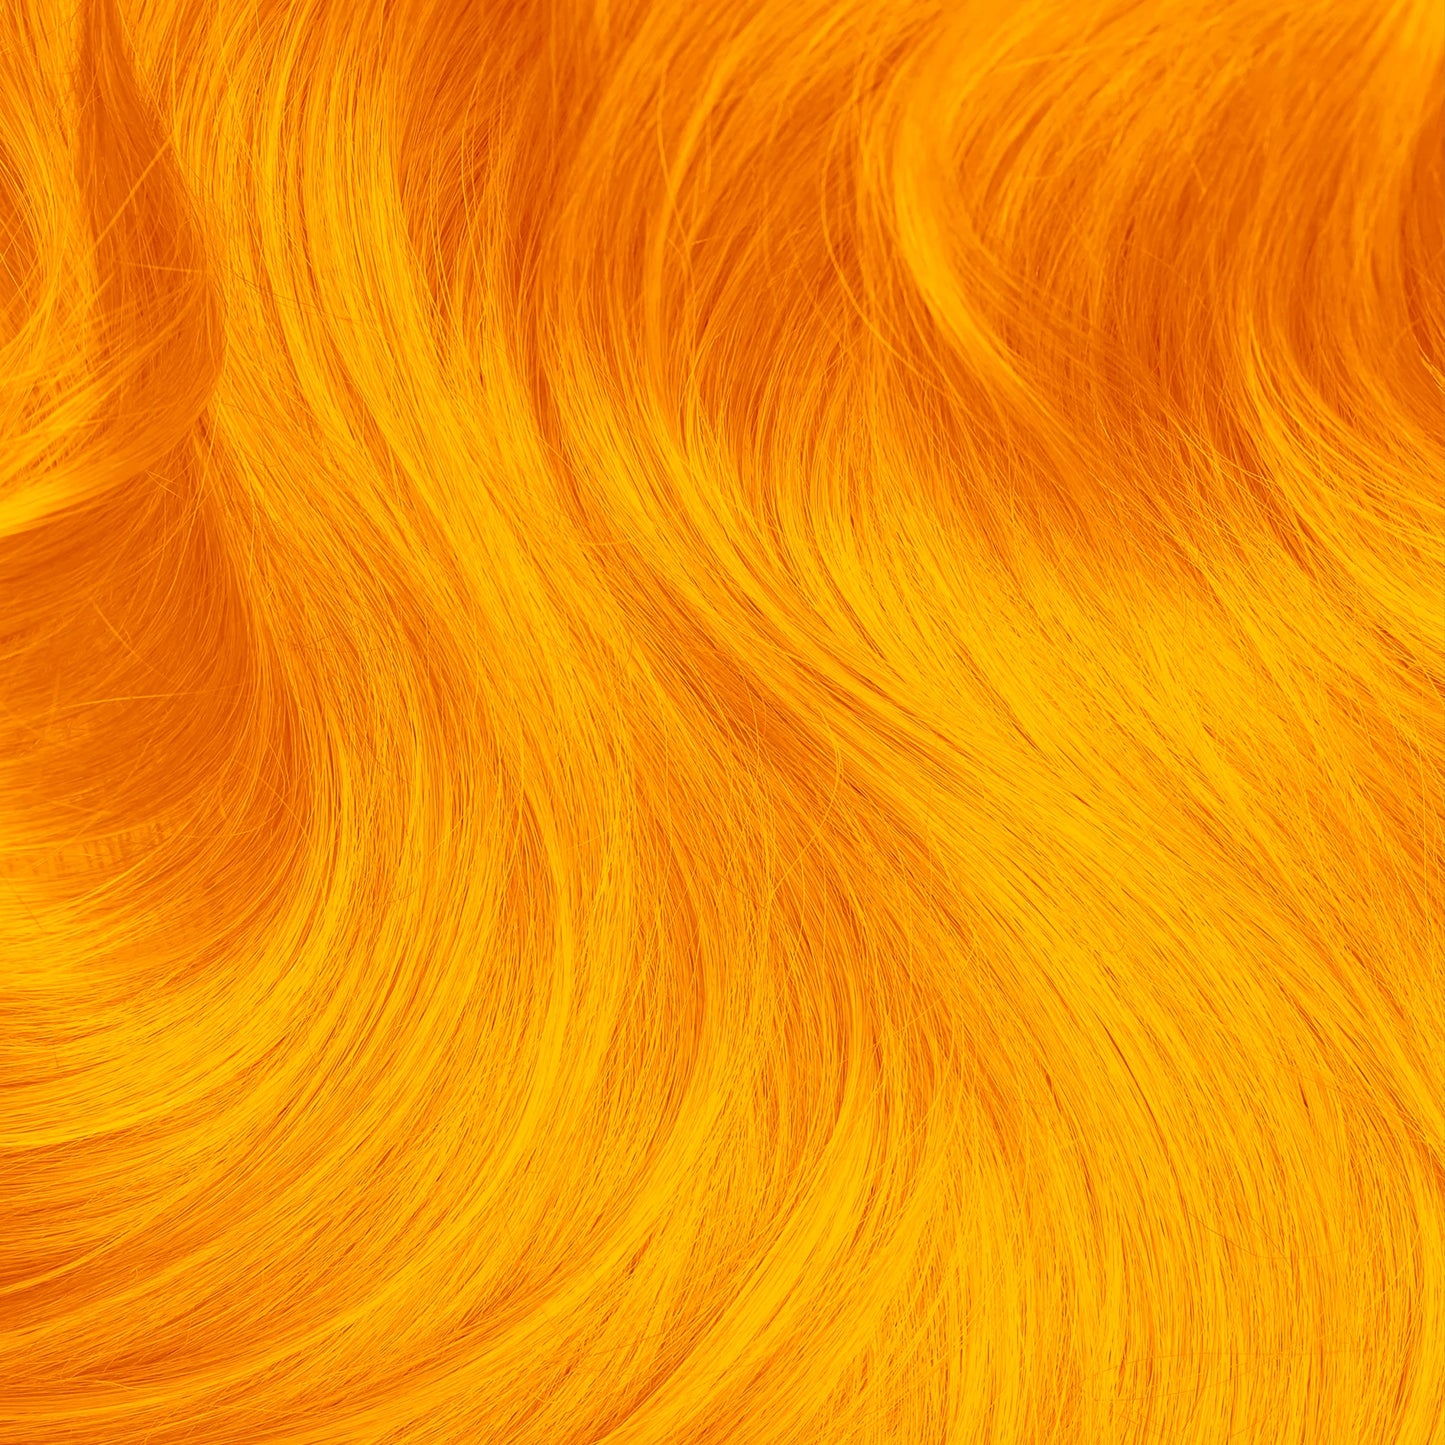 FIRE OPAL hair dye Lunar Tides